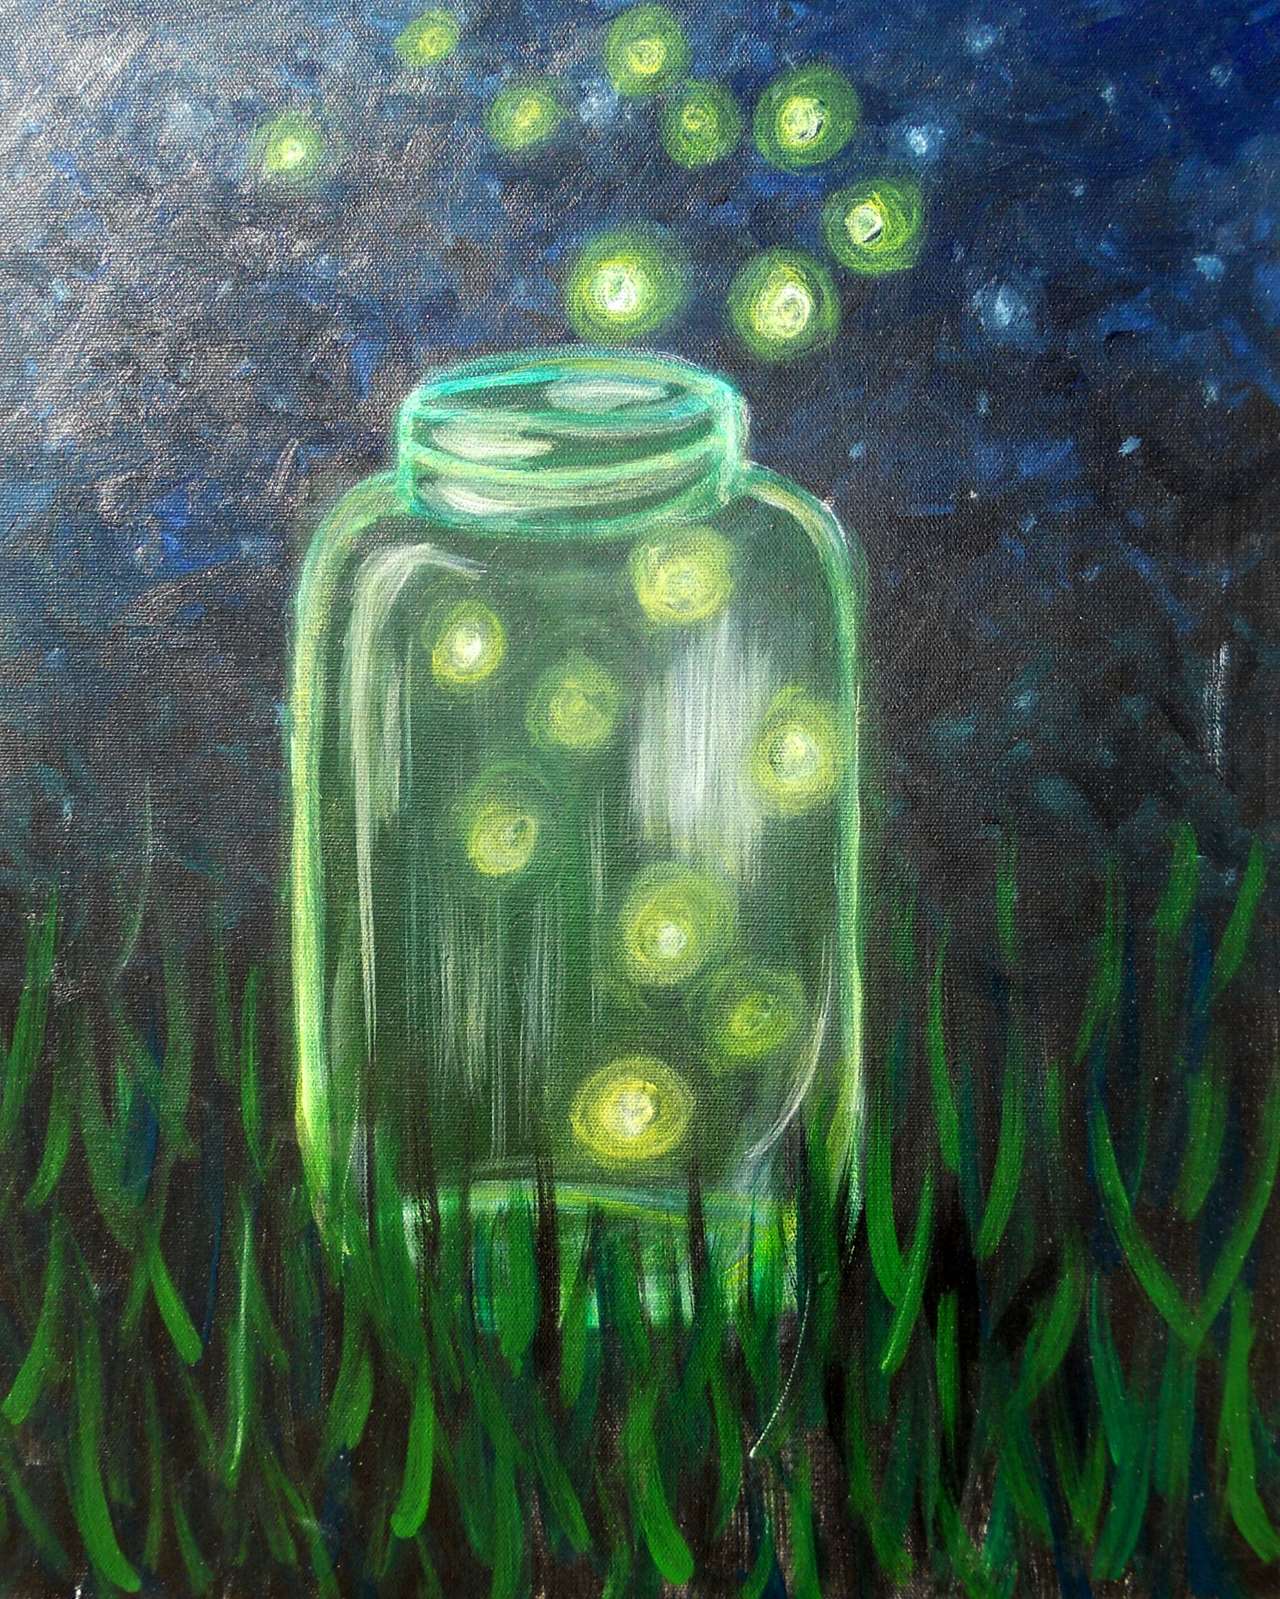 fireflies in a jar drawing